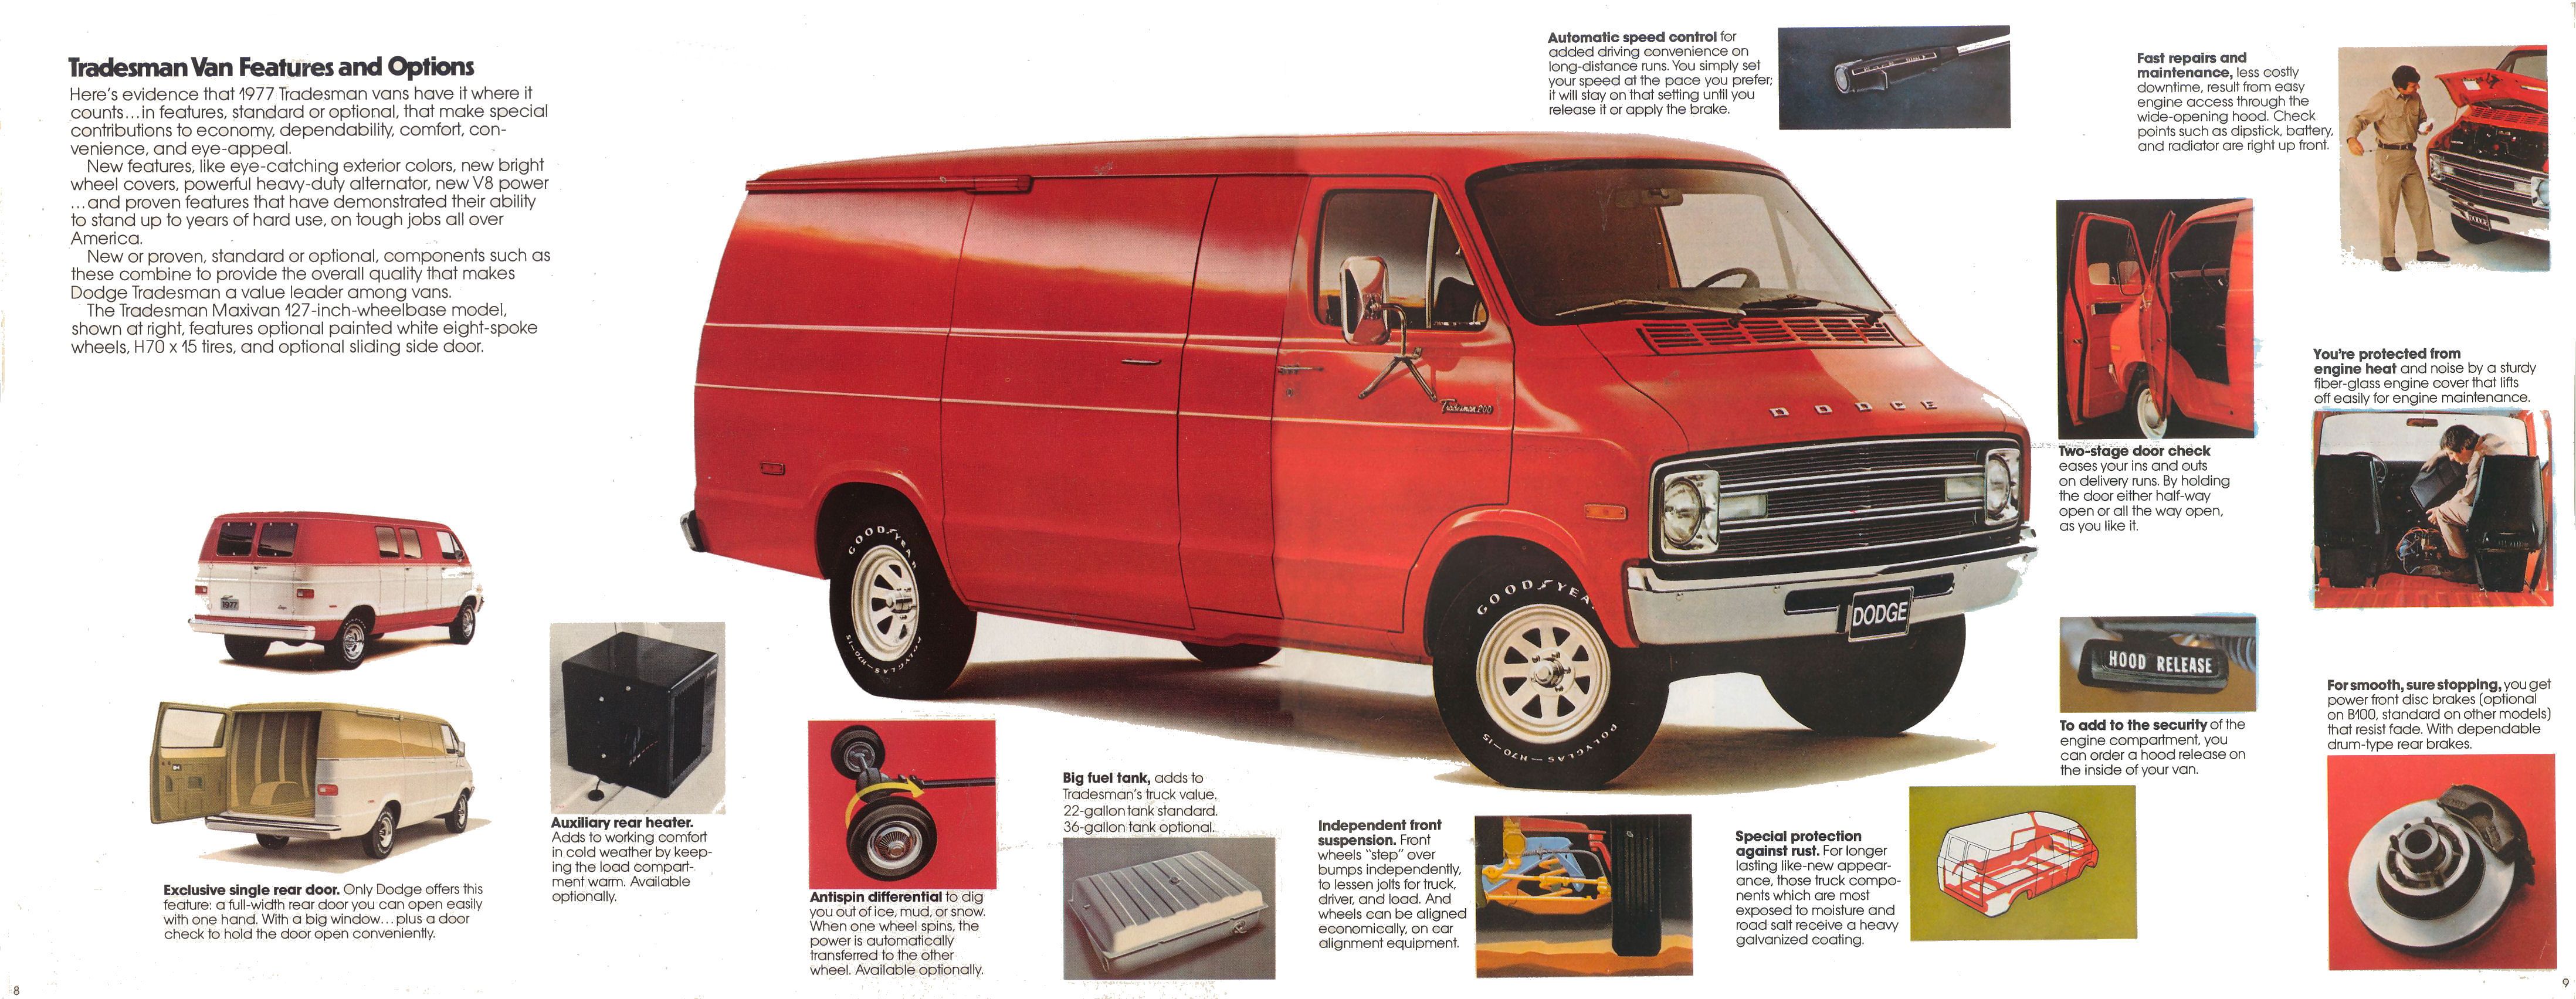 1977_Dodge_Tradesman_Vans-08-09